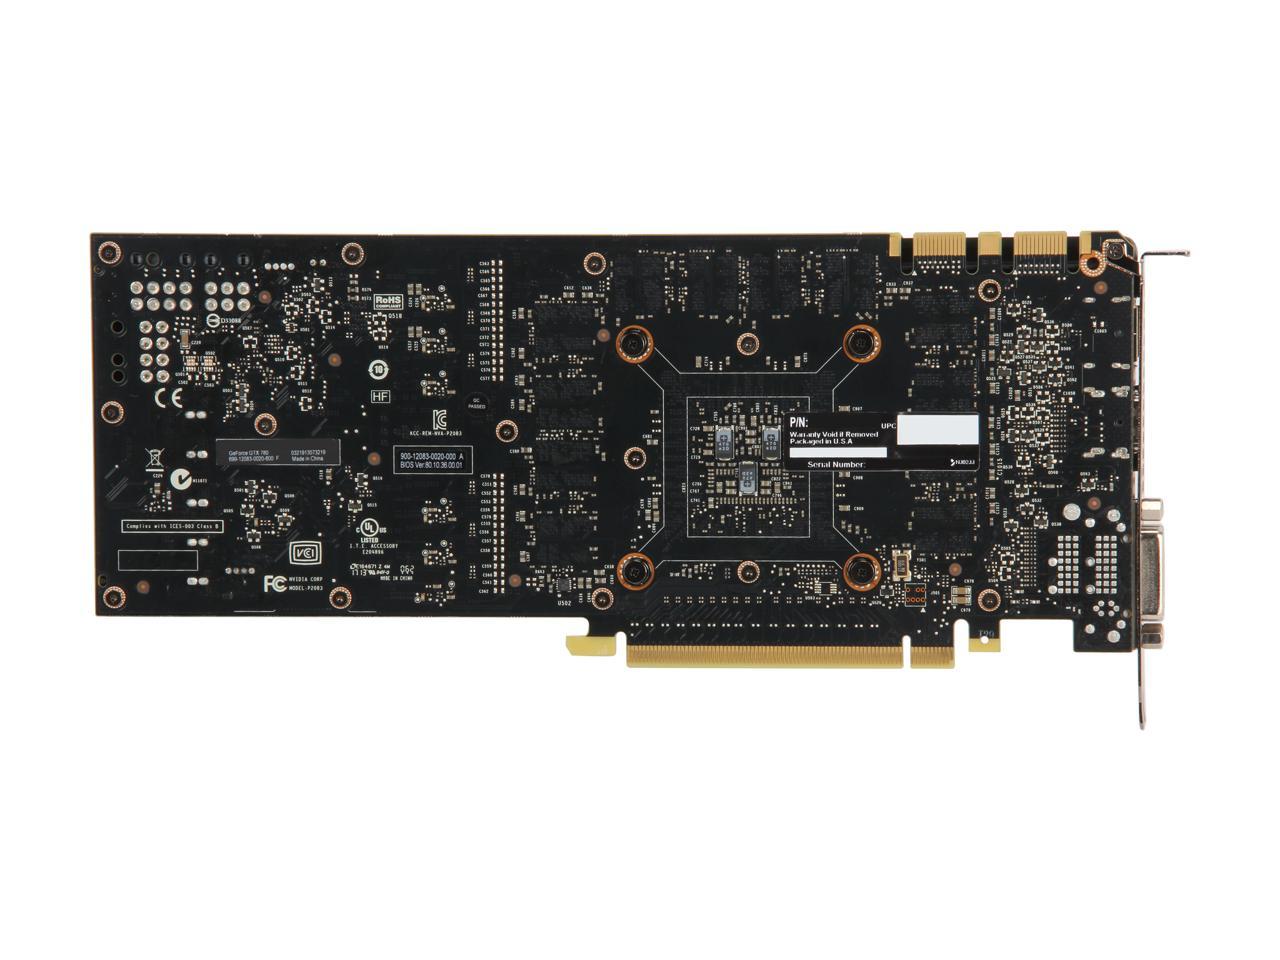 EVGA SuperClocked 03G-P4-2783-KR G-SYNC Support GeForce GTX 780 3GB 384-bit GDDR5 PCI Express 3.0 SLI Support Video Card